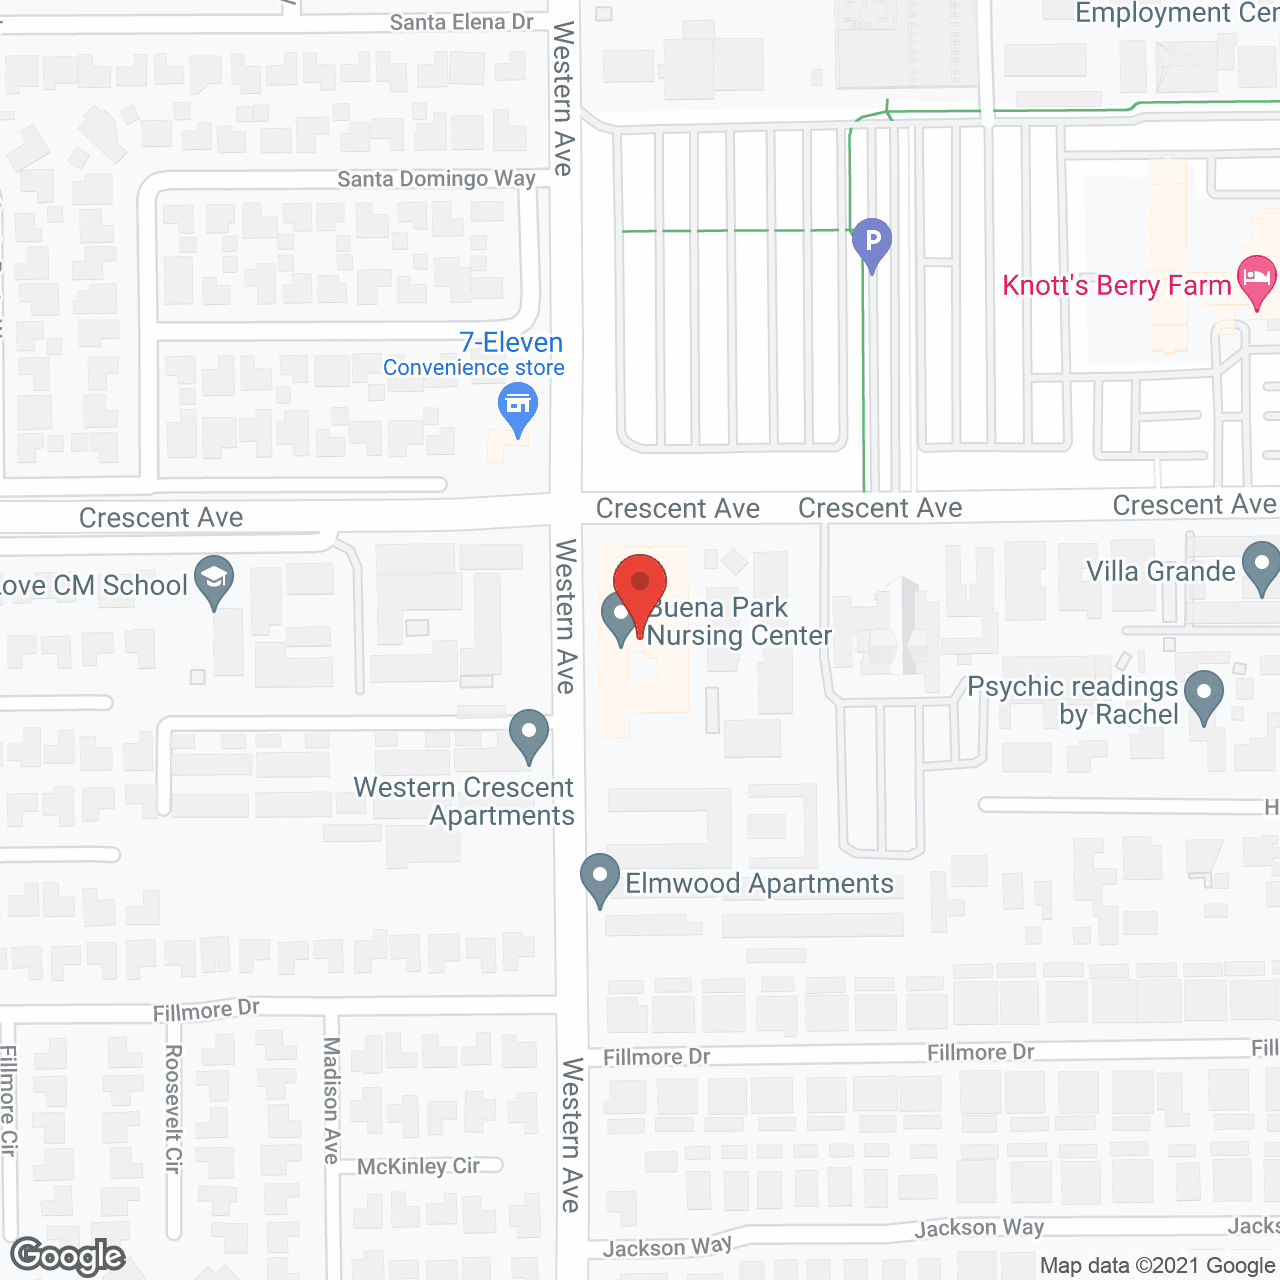 Buena Park Nursing Center in google map